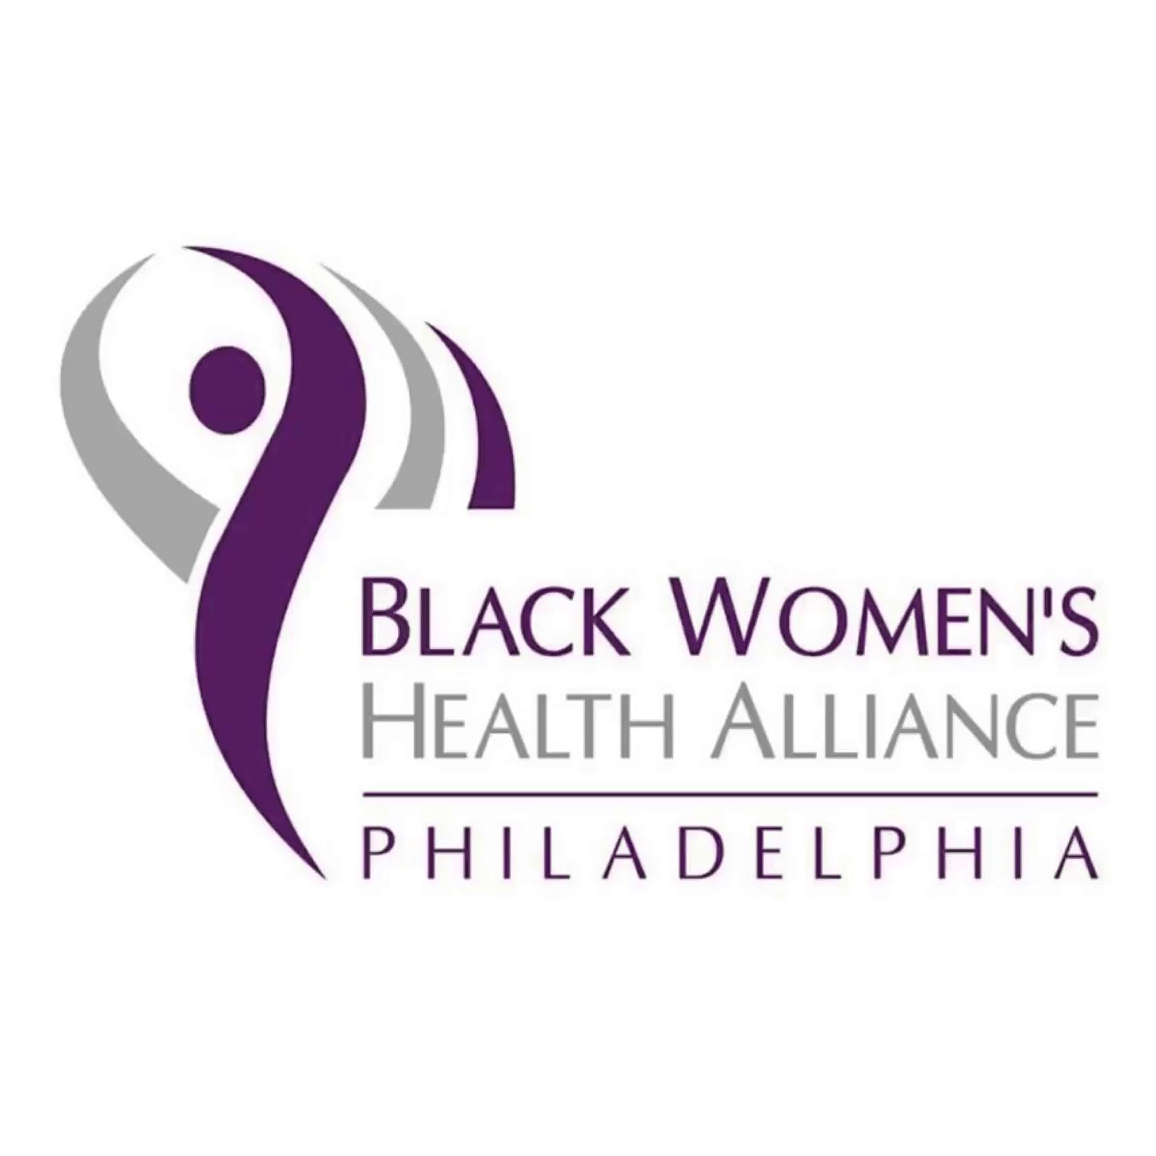 Woman Organization in Philadelphia Pennsylvania - Philadelphia Black Women's Health Alliance